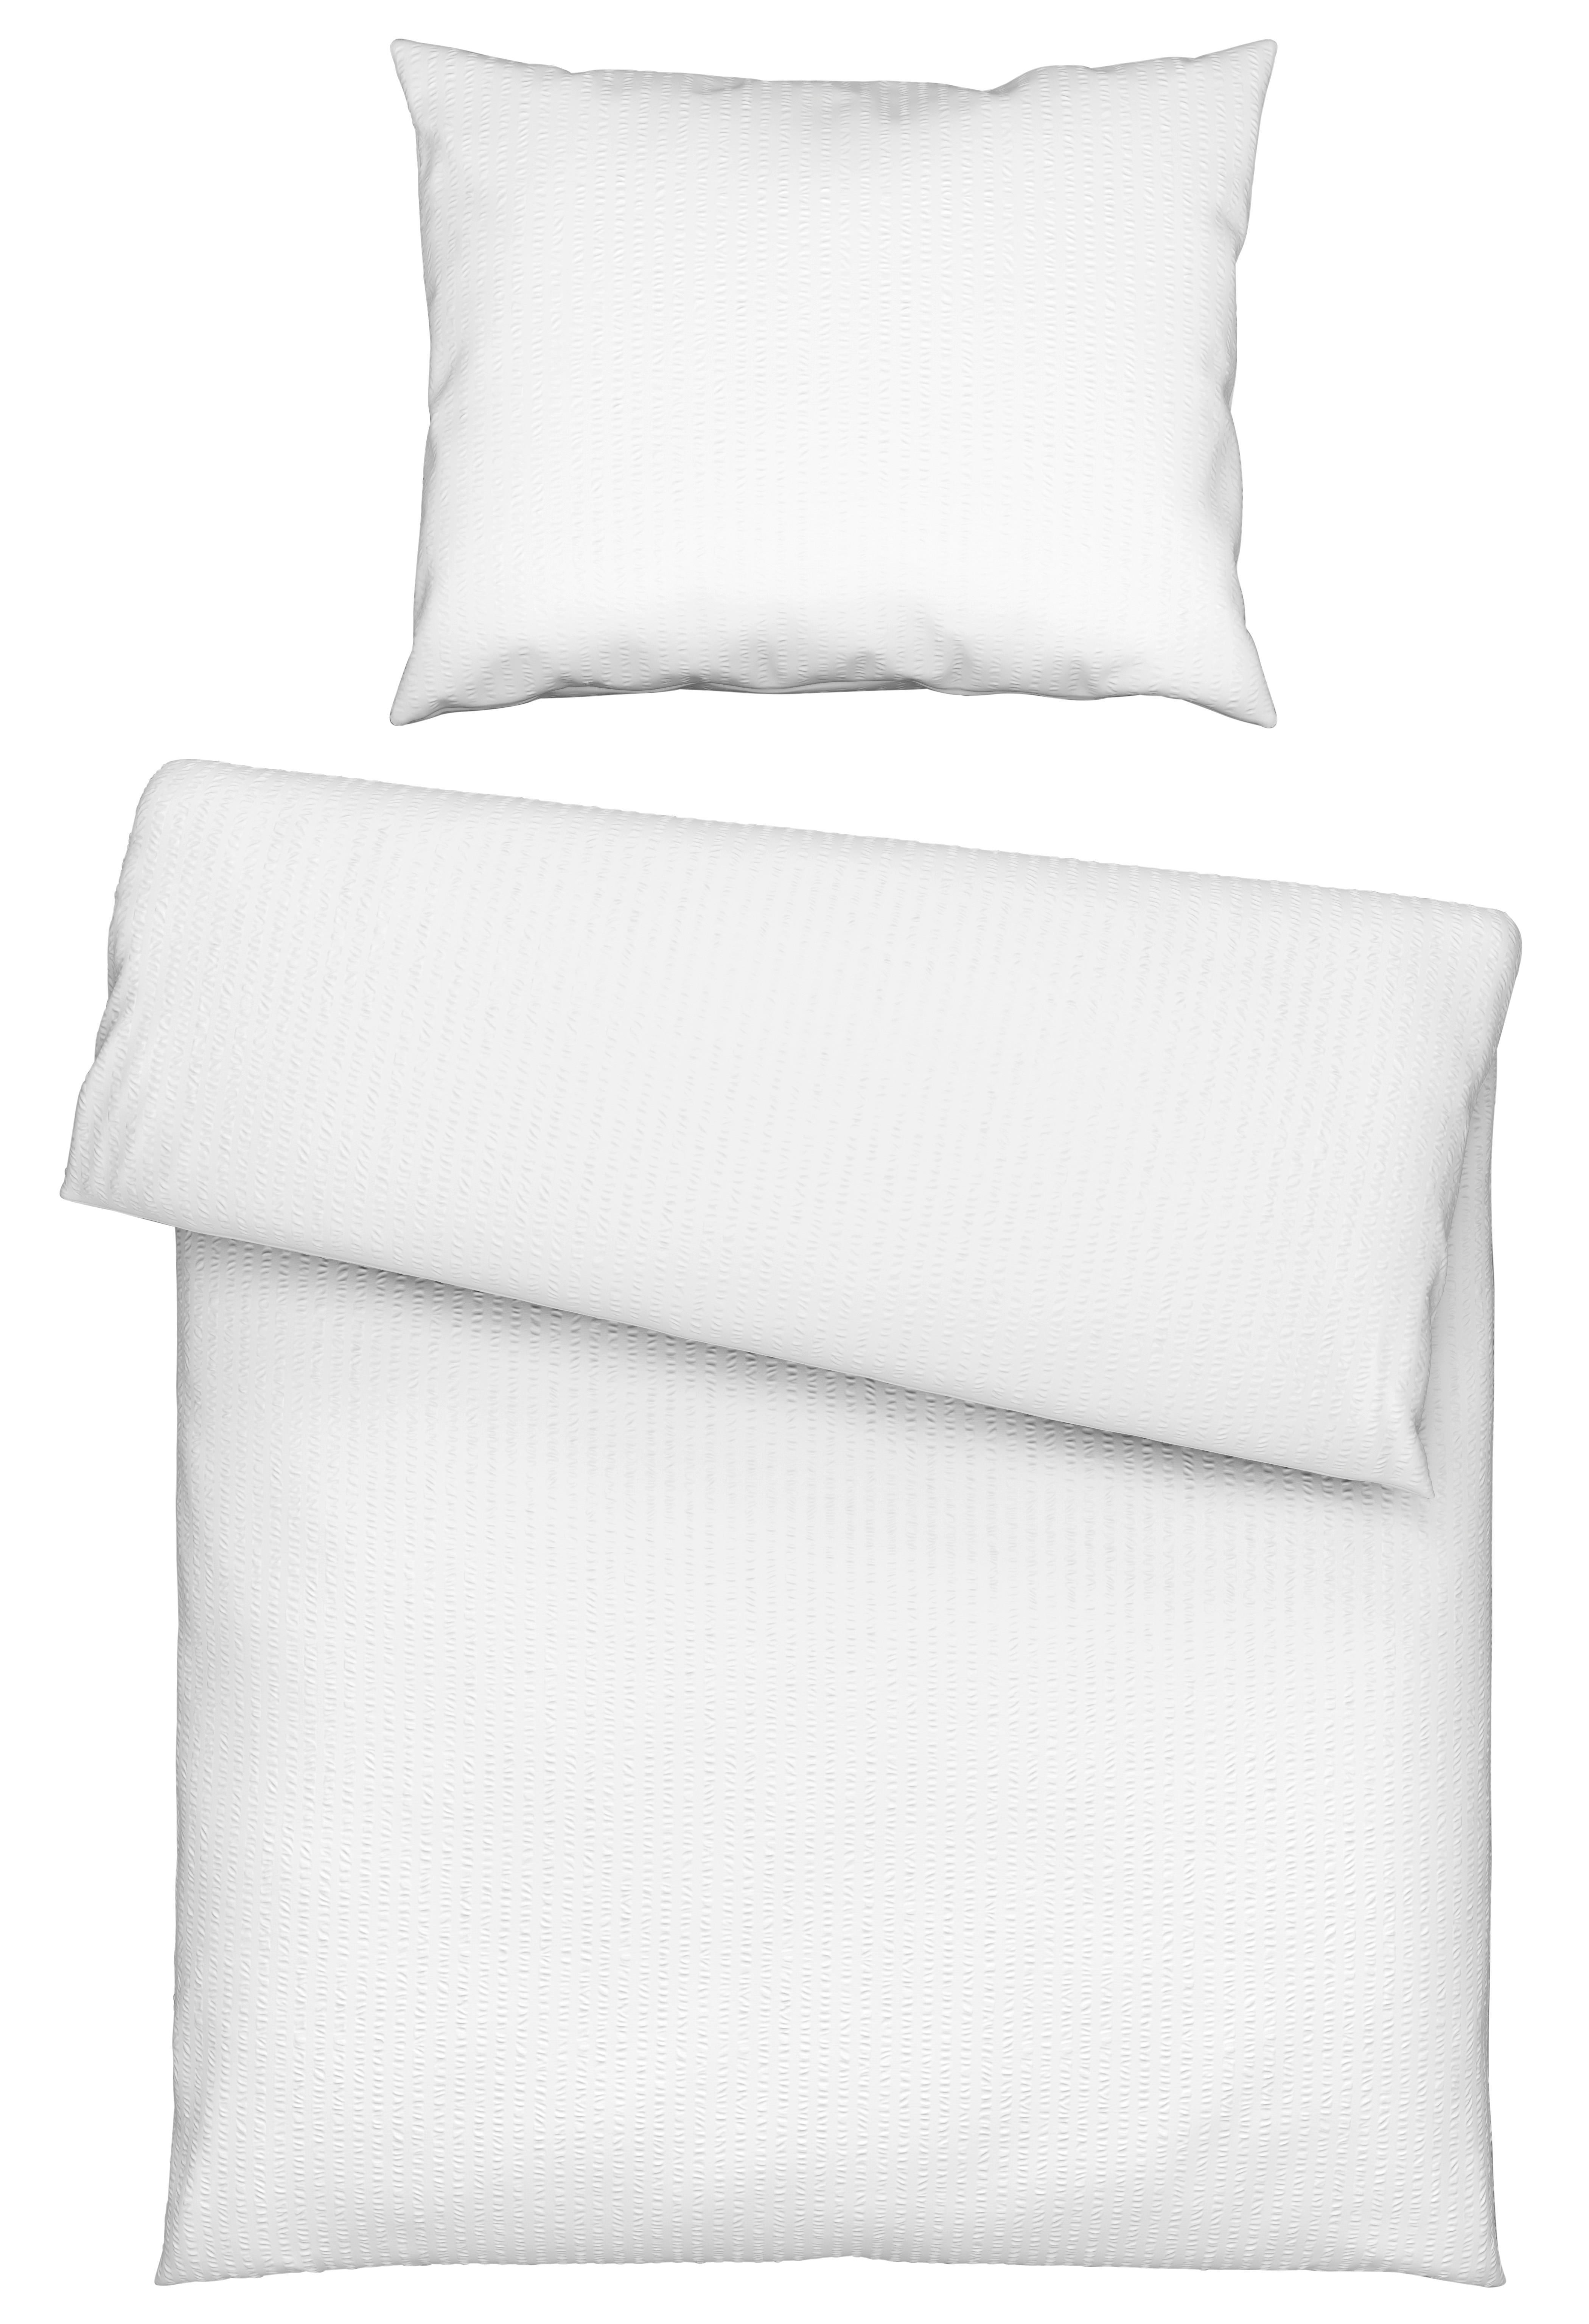 BETTWÄSCHE 140/200 cm  - Weiß, Basics, Textil (140/200cm) - Esposa